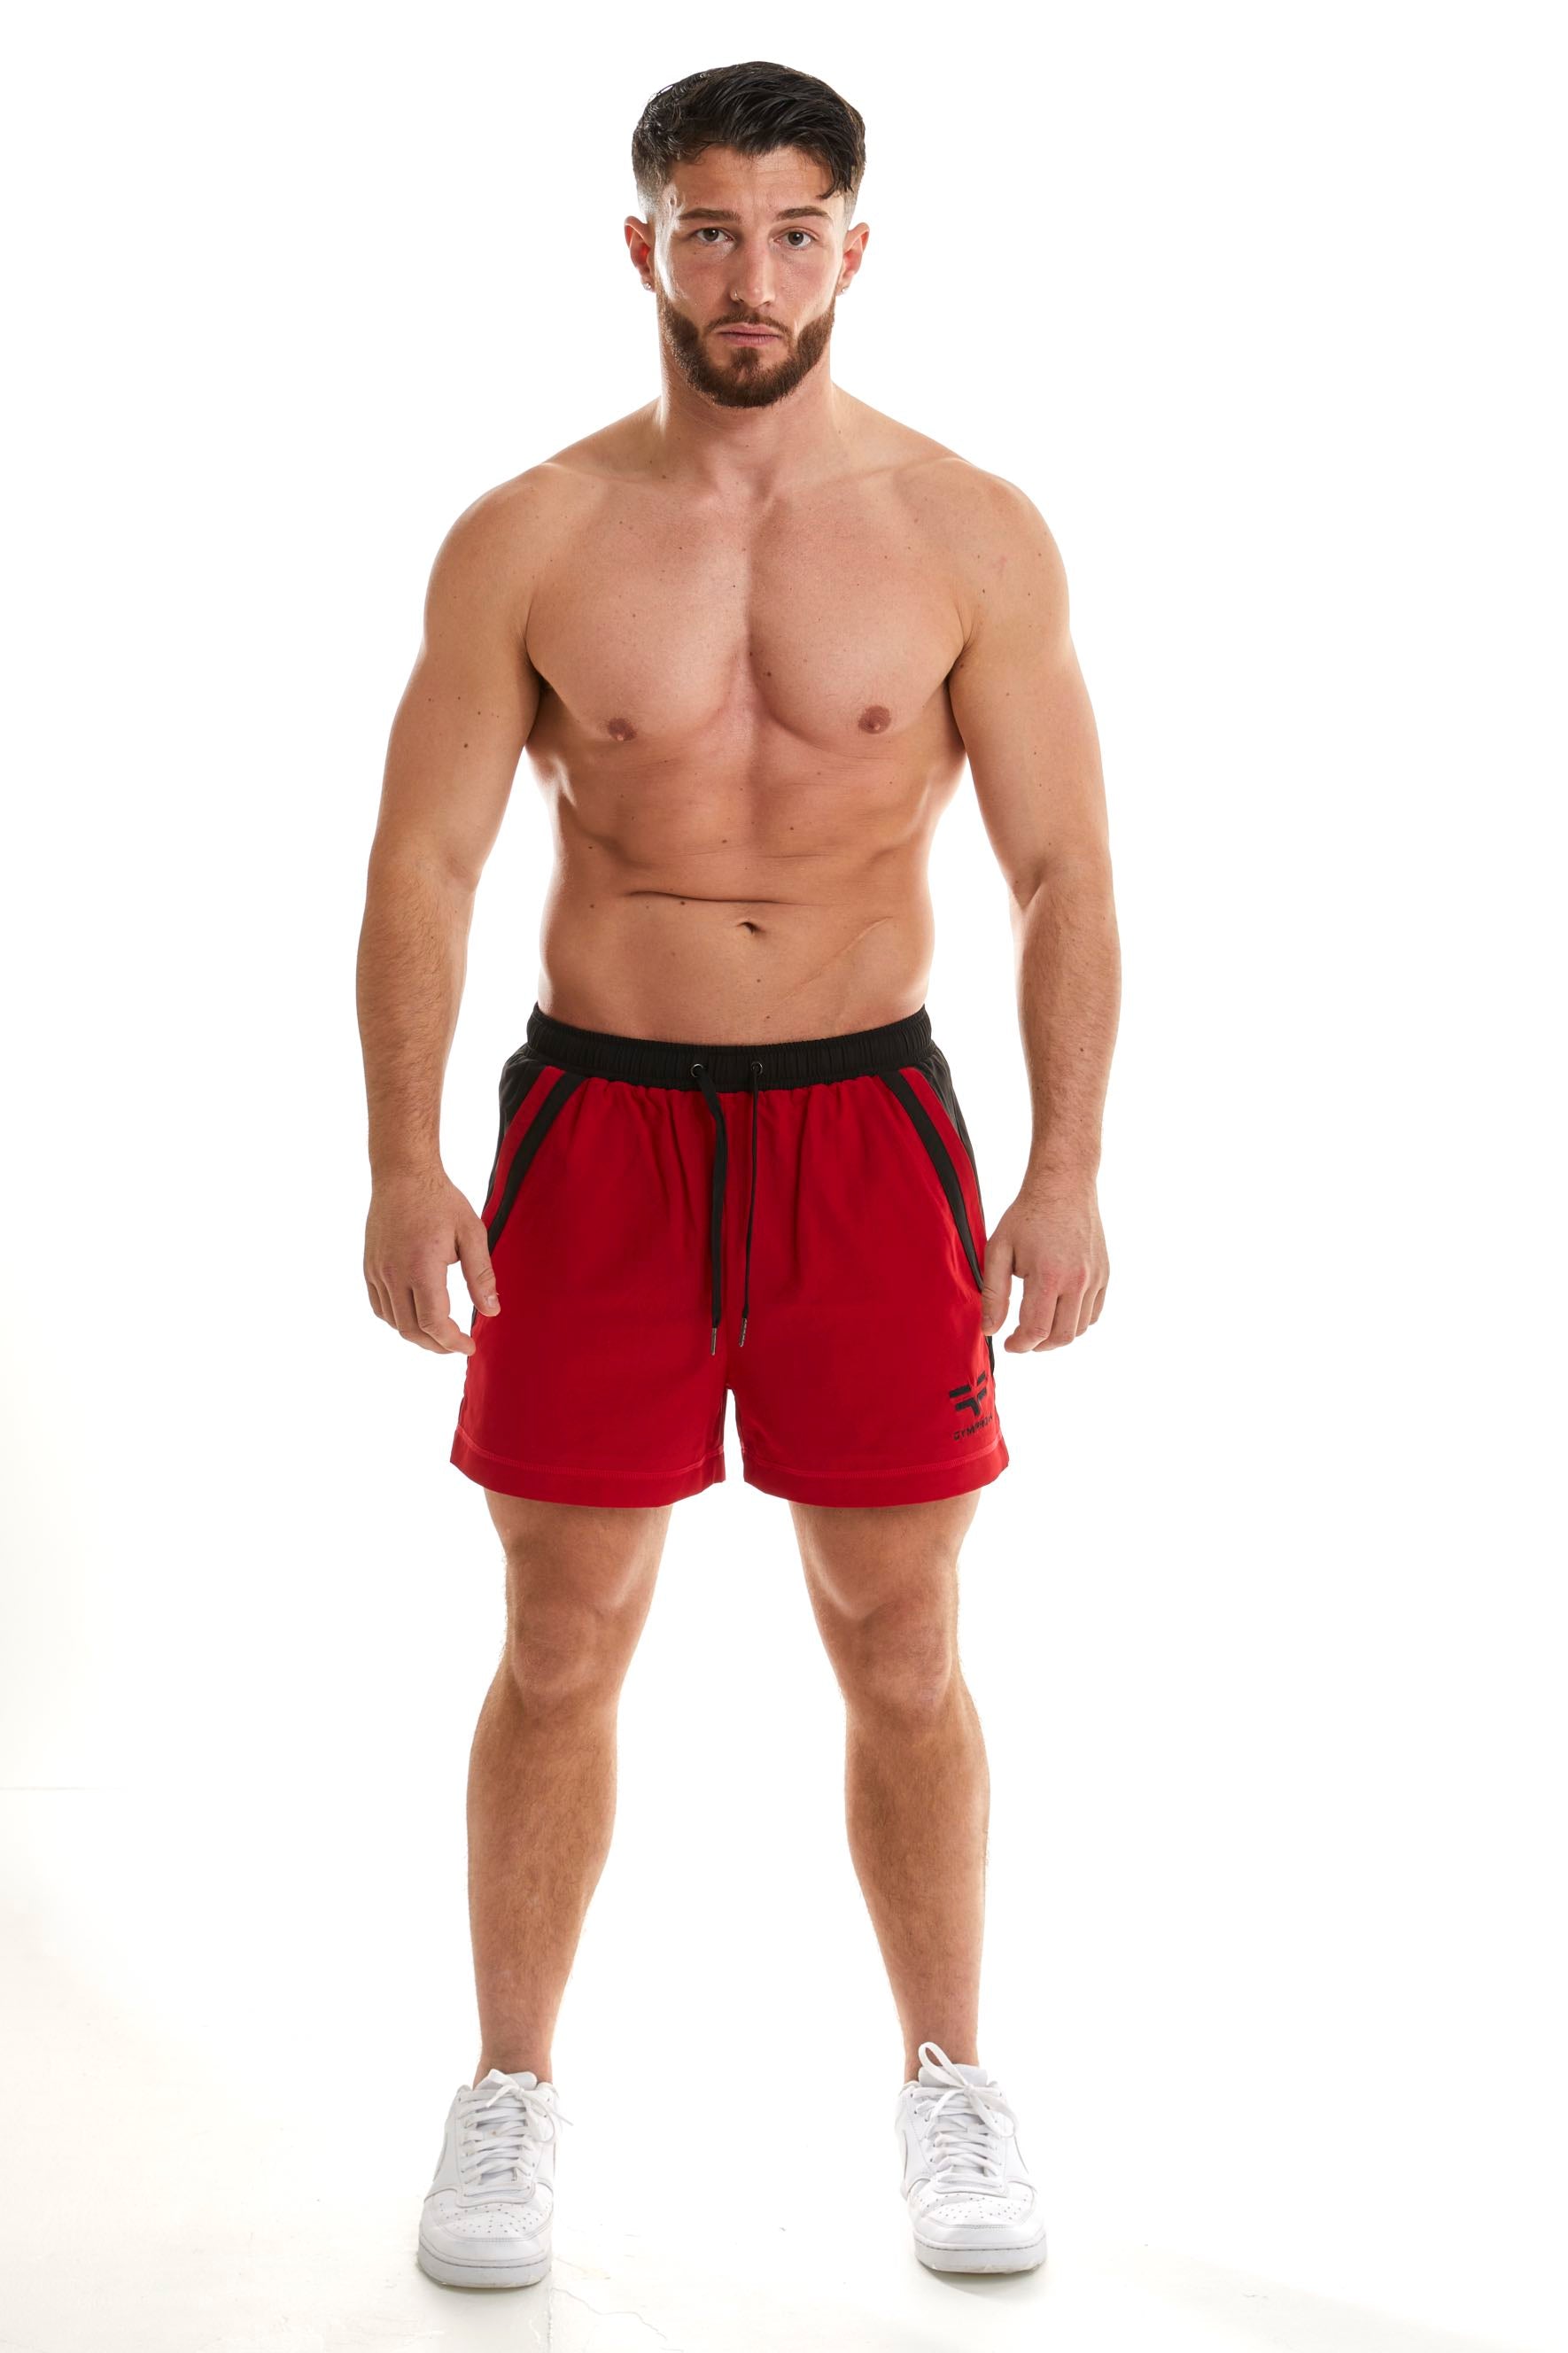 GymFreak Mens Pro Shorts - Red/Black - 3.5 inch